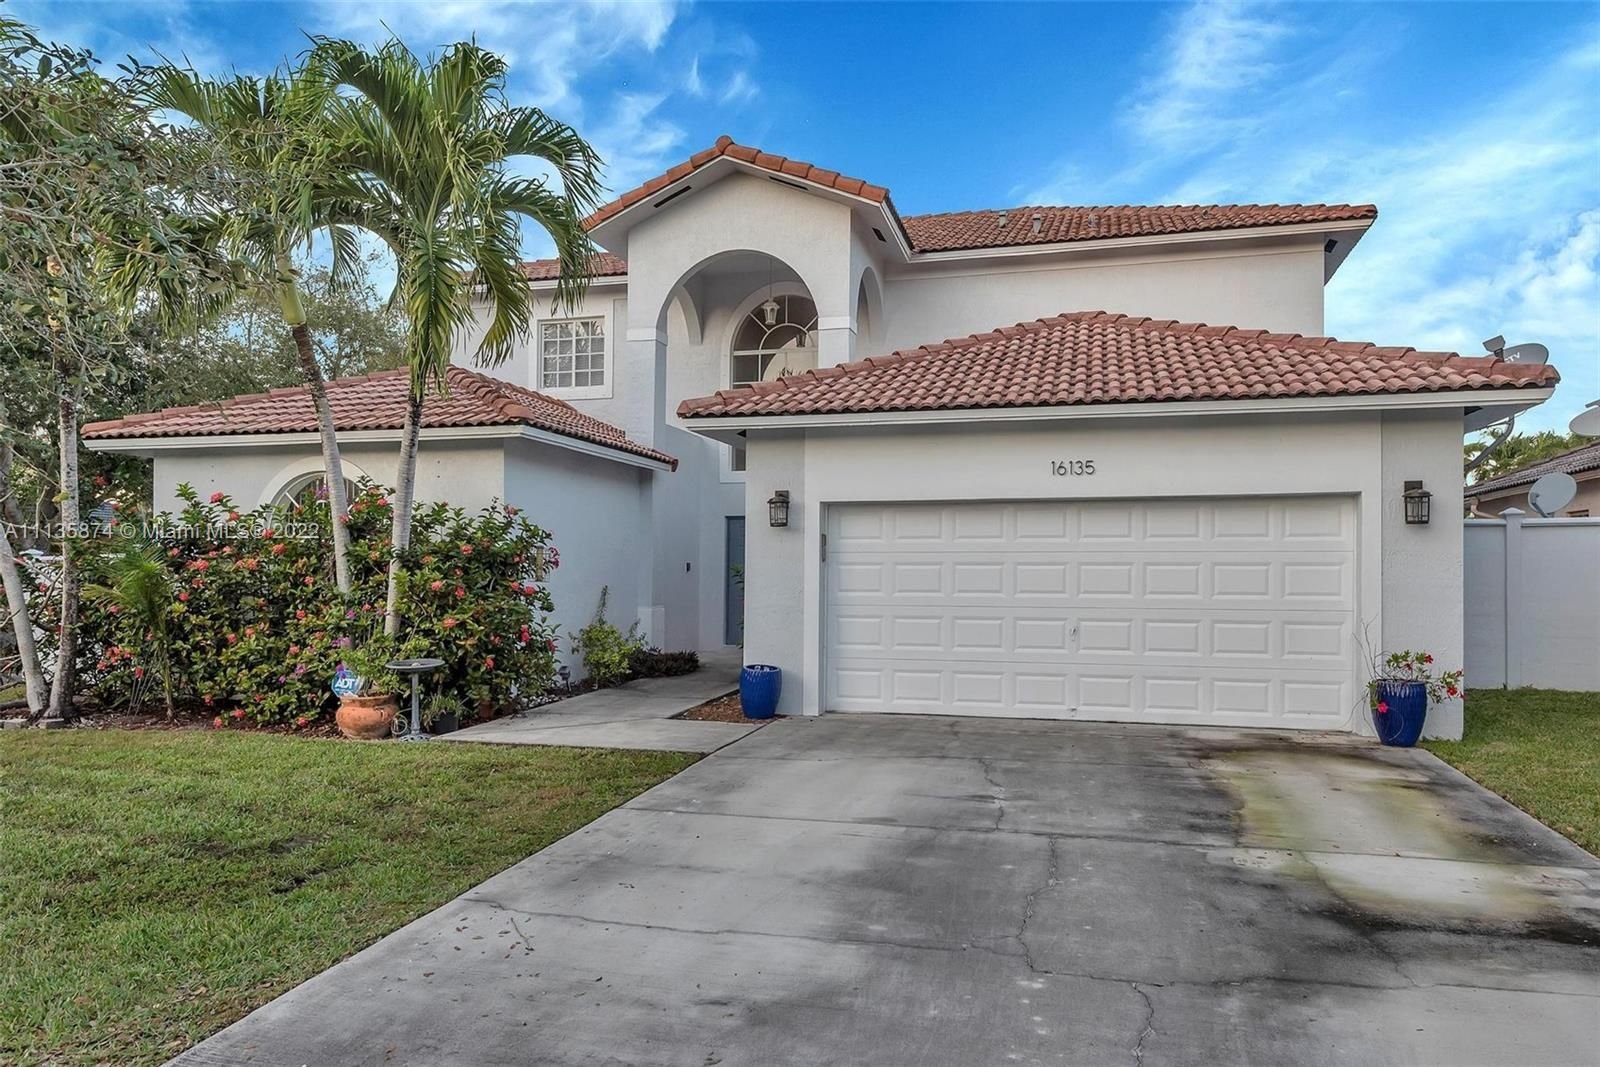 Real estate property located at 16135 147th St, Miami-Dade County, Miami, FL